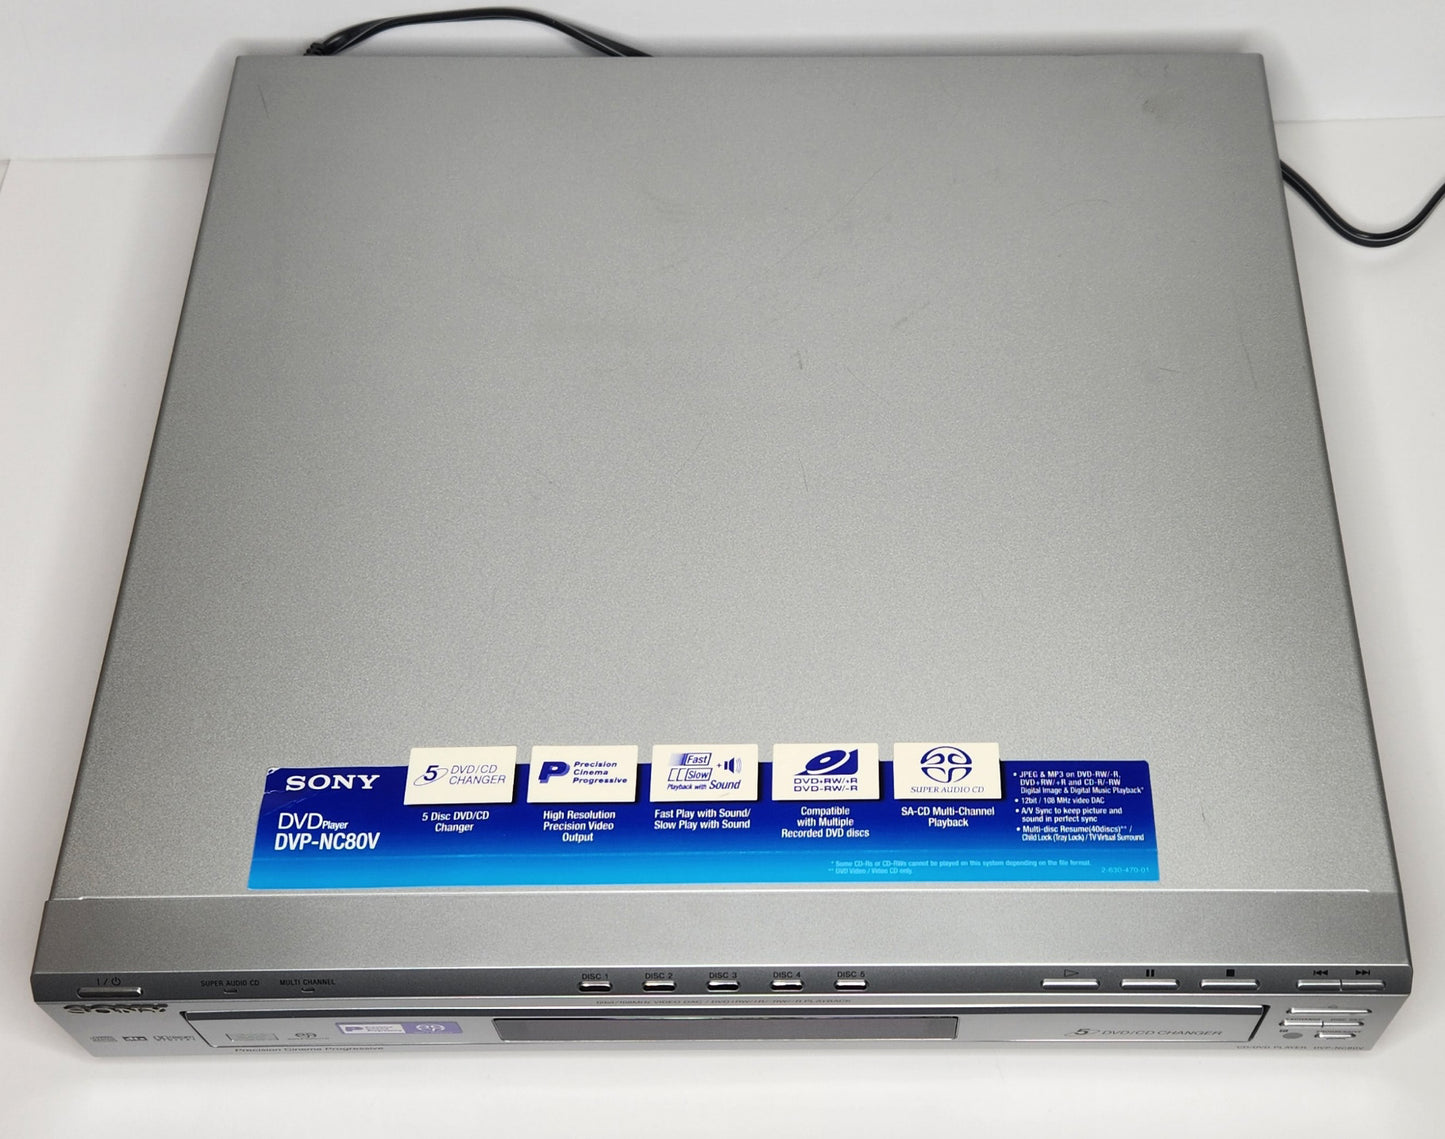 Sony DVP-NC80V CD/DVD Player, 5 Disc Carousel Changer - Top